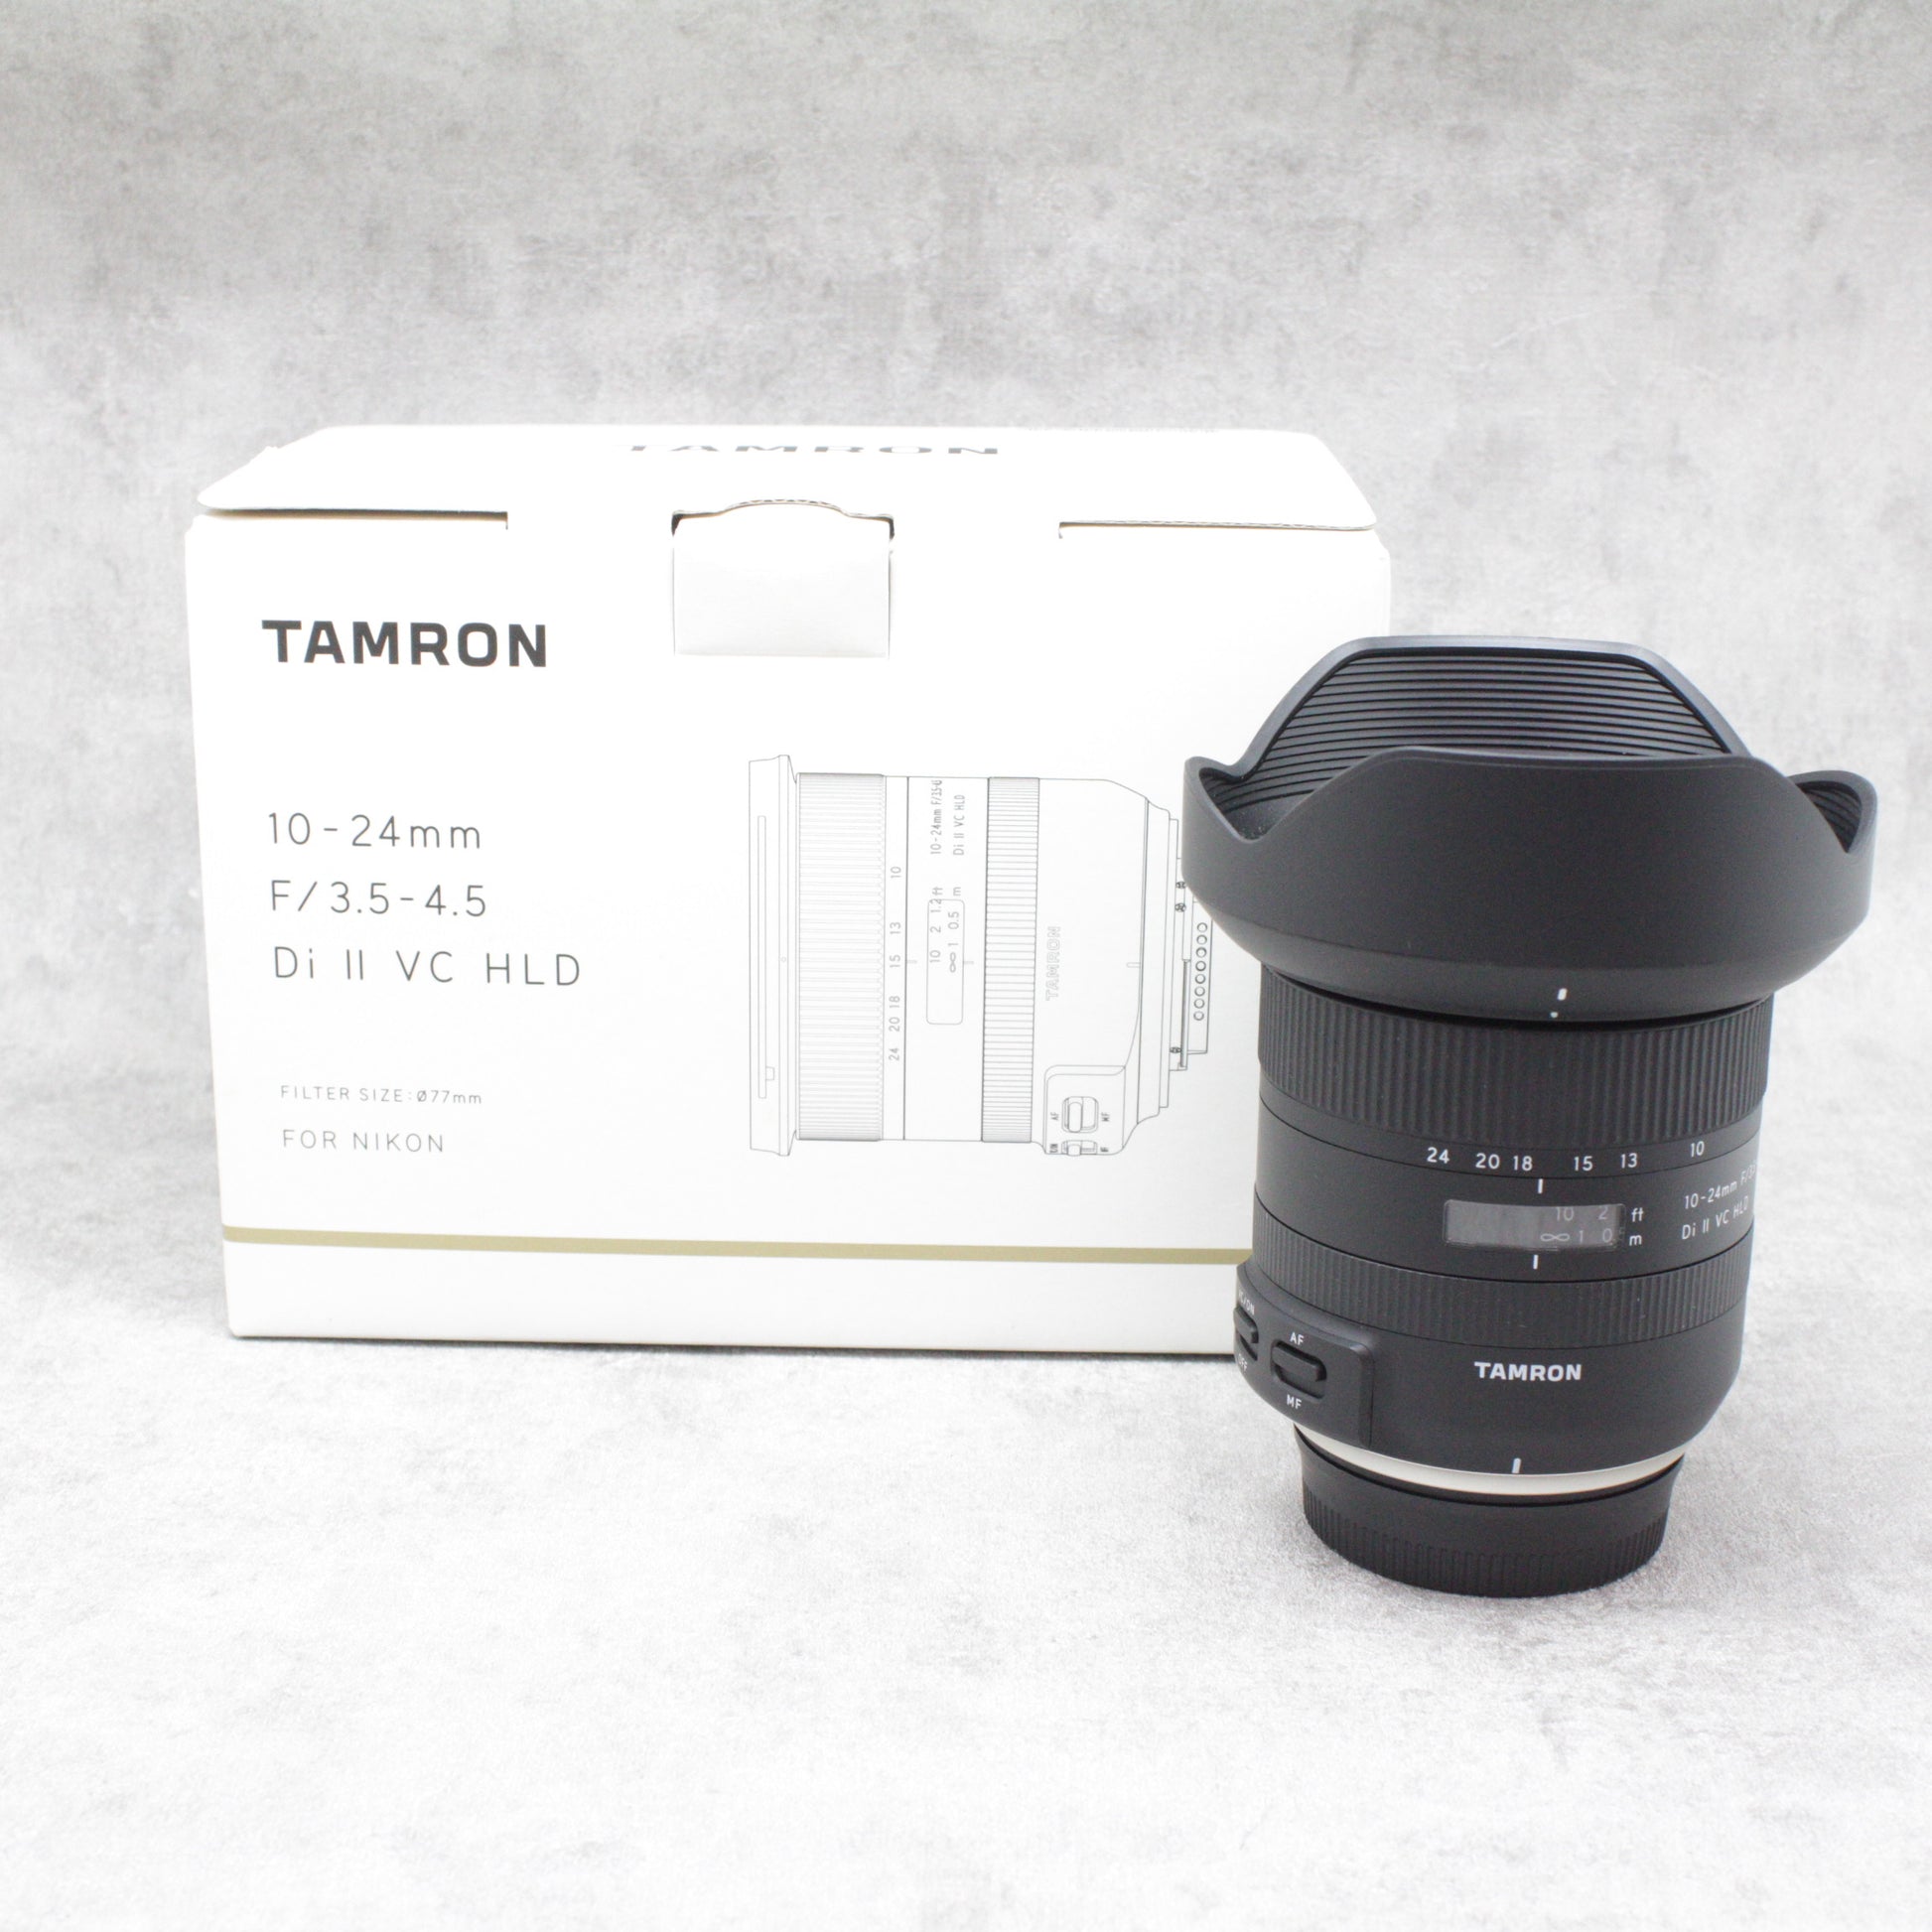 中古品 TAMRON10-24mm F/3.5-4.5 Di II VC HLD (Model B023) NIkon用